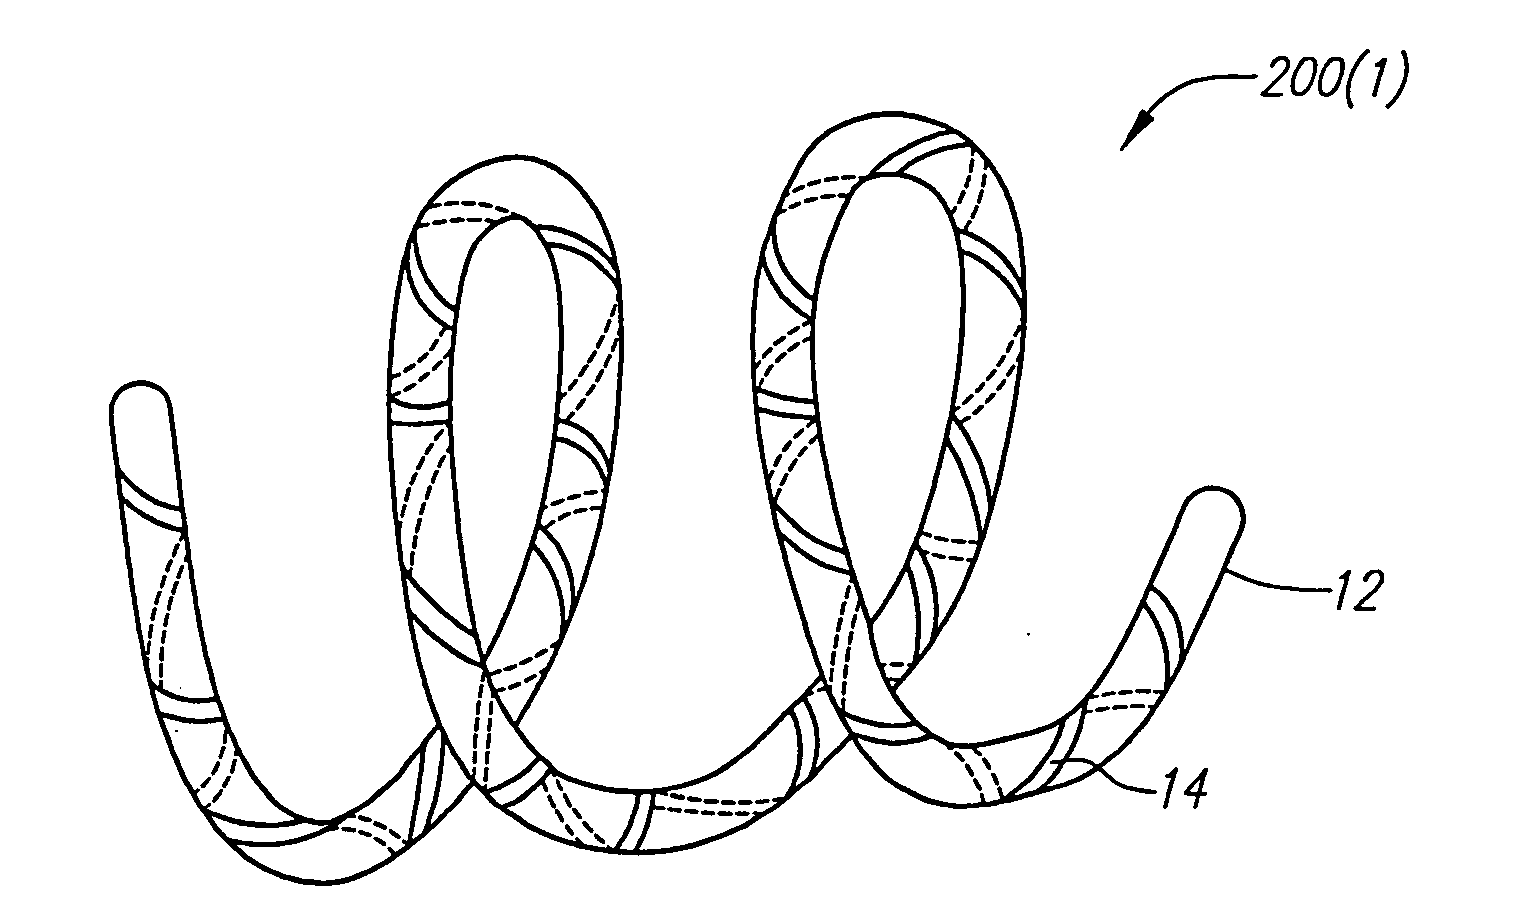 Foldable vaso-occlusive member